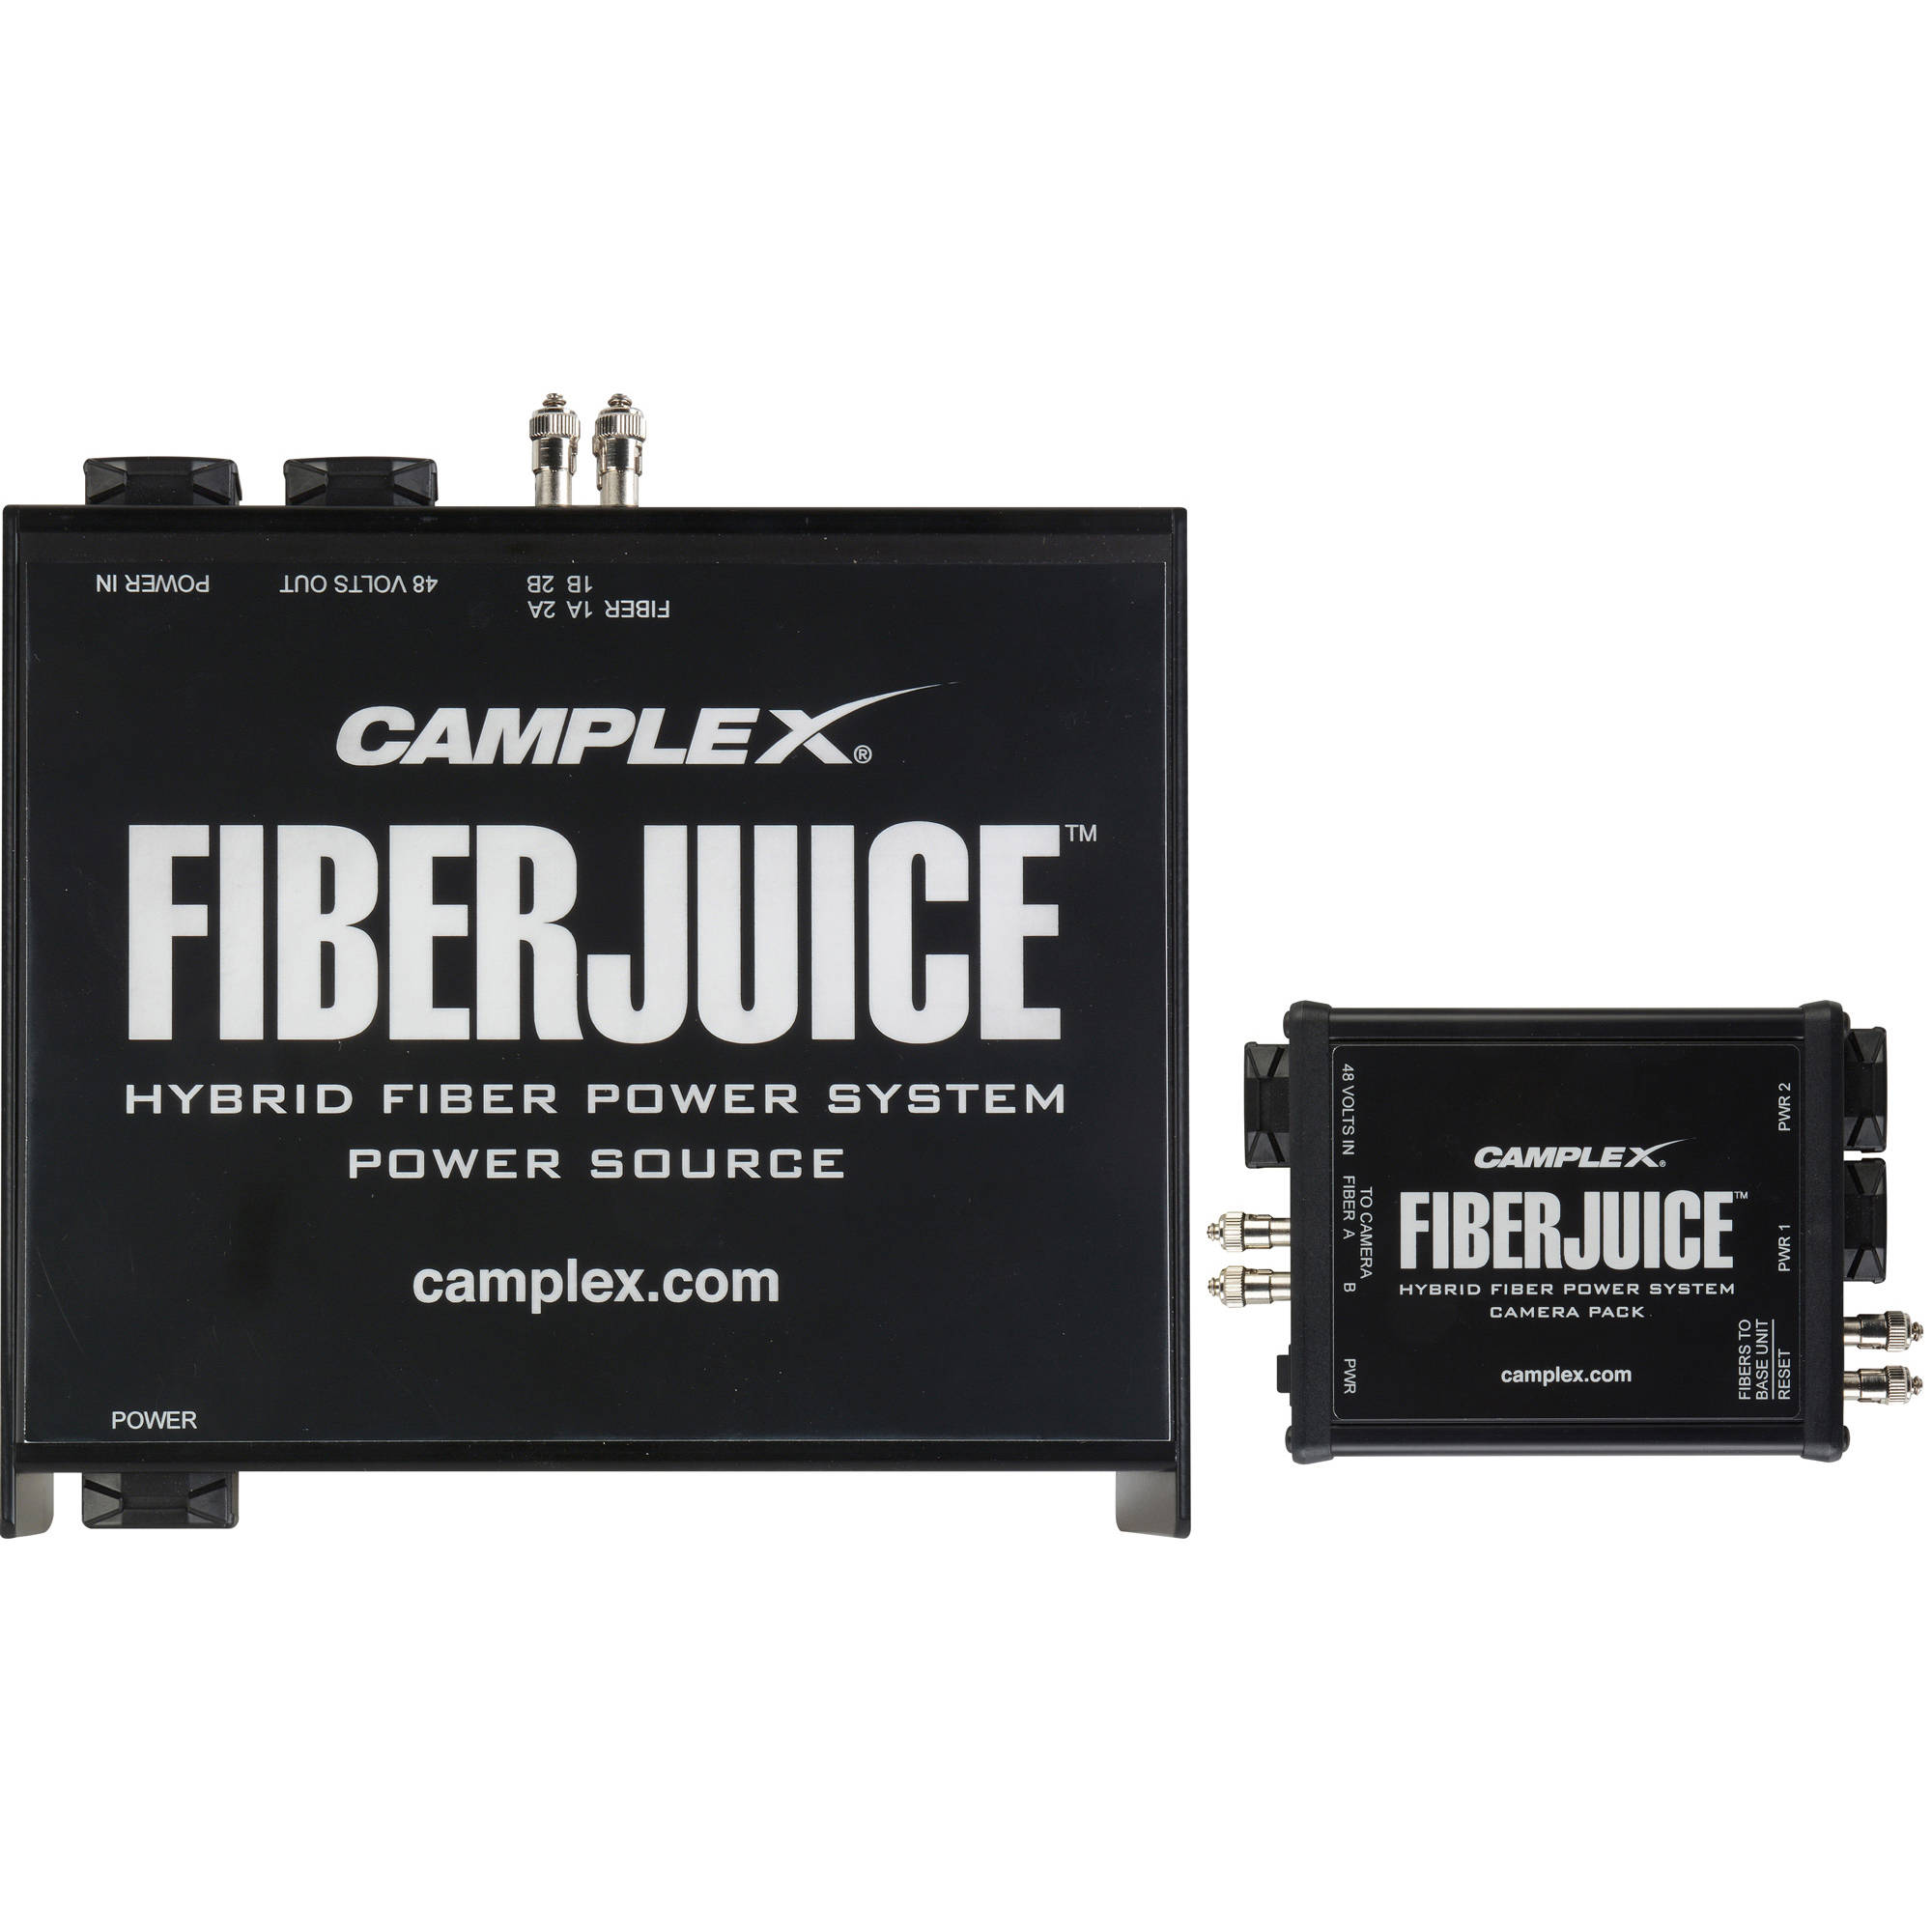 Camplex FIBERJ-1P-TAC Single Camera FiberJuice Tactical Fiber Power Supply & 1 ST Camera Pack